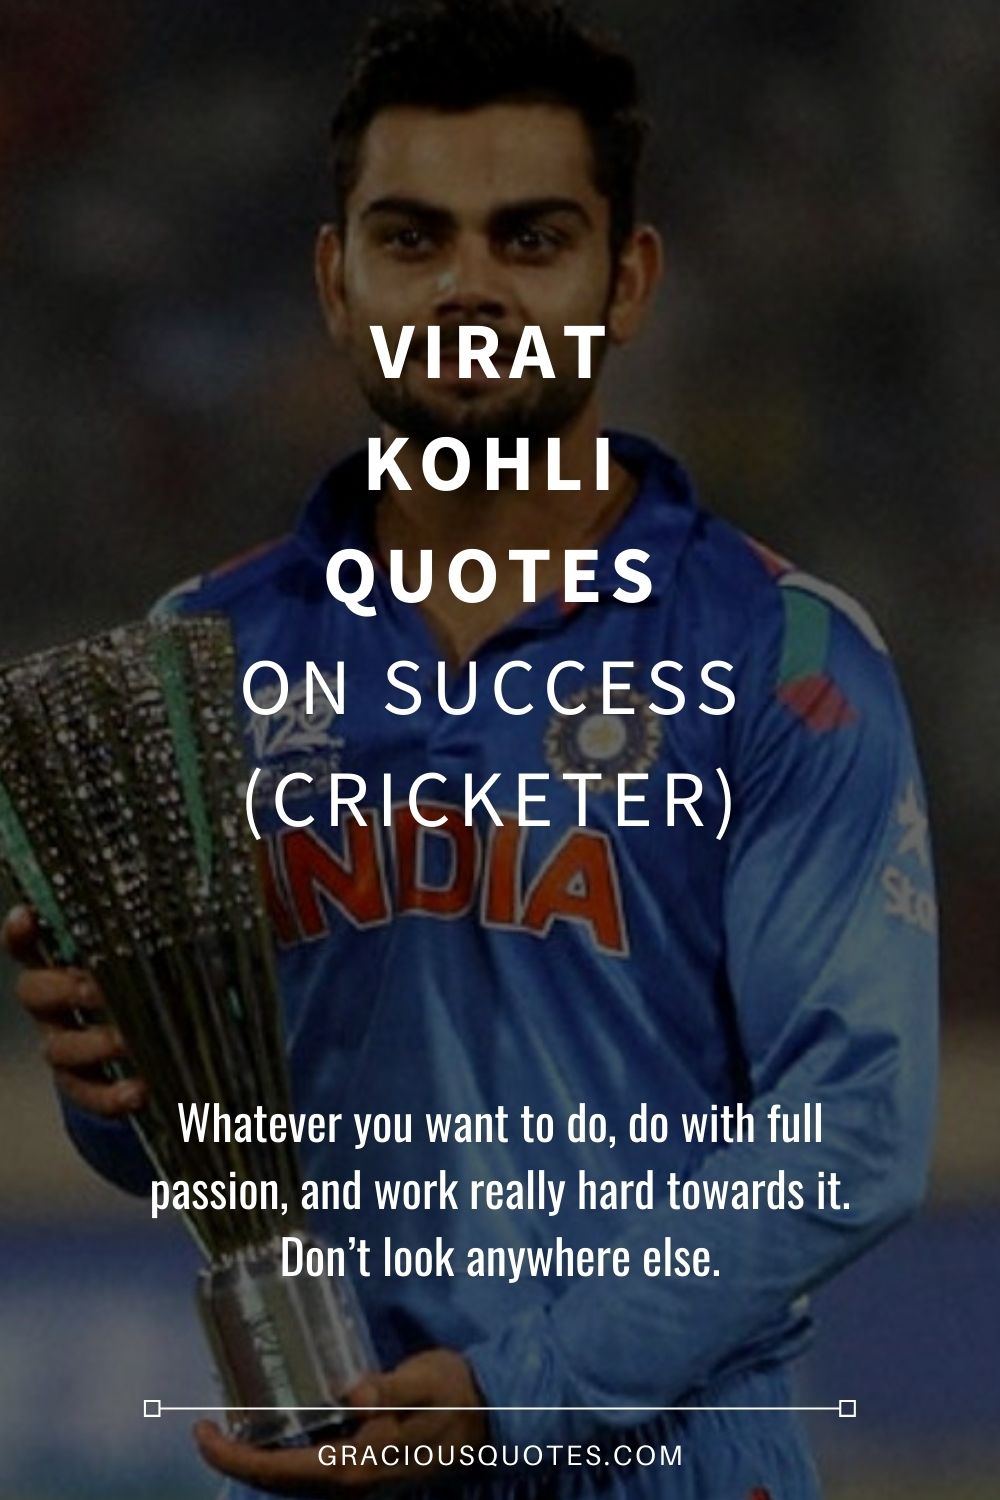 Virat Kohli Quotes on Success (CRICKETER) - Gracious Quotes